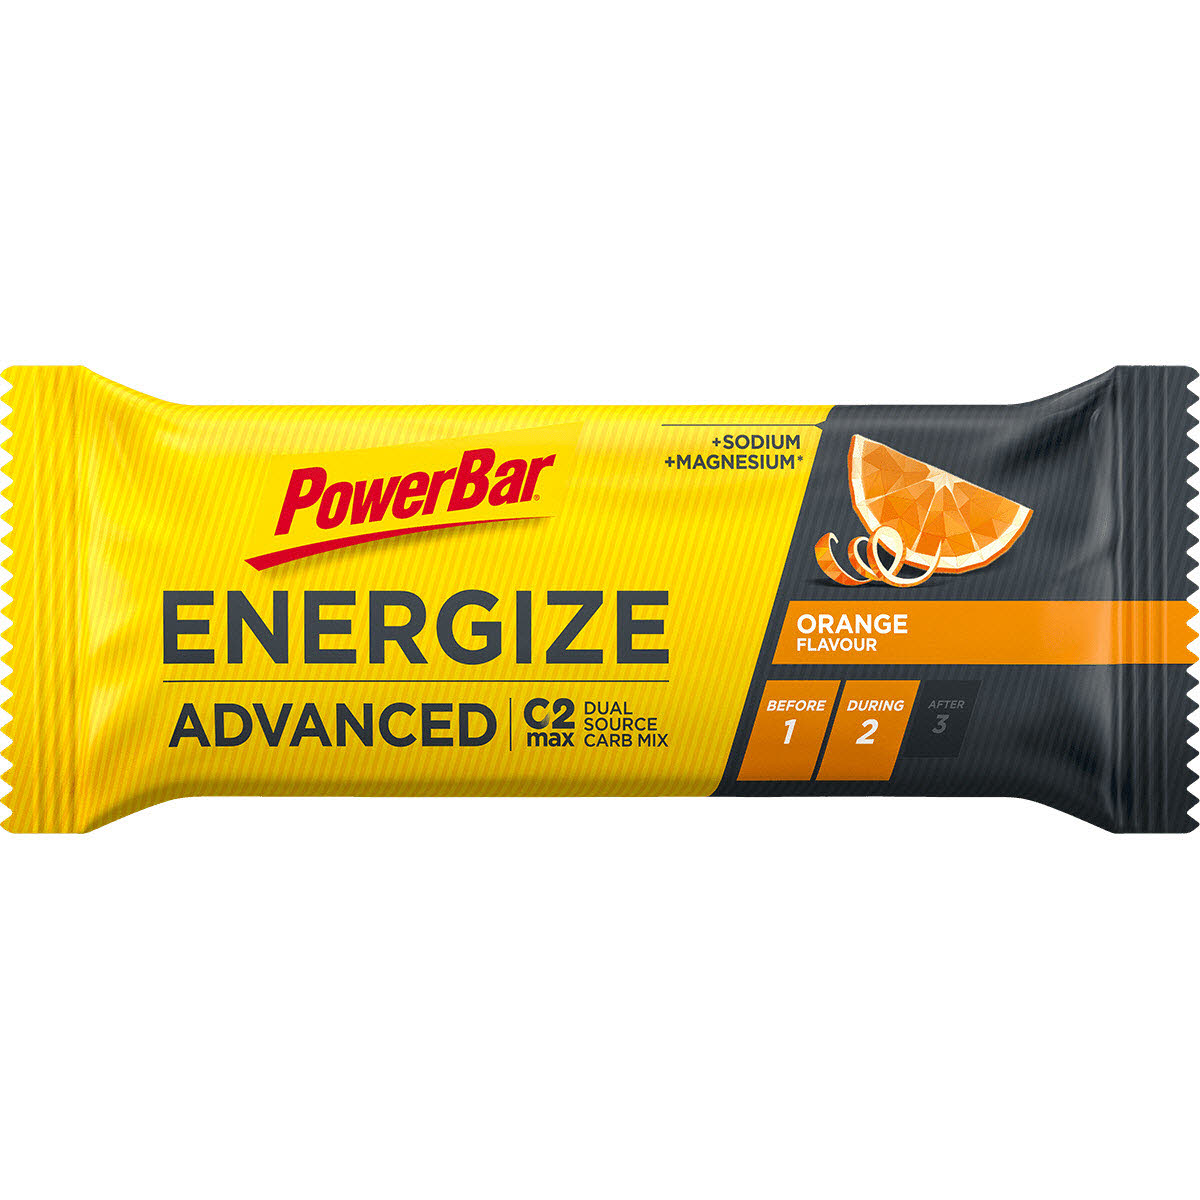 PowerBar Energize Advanced F2